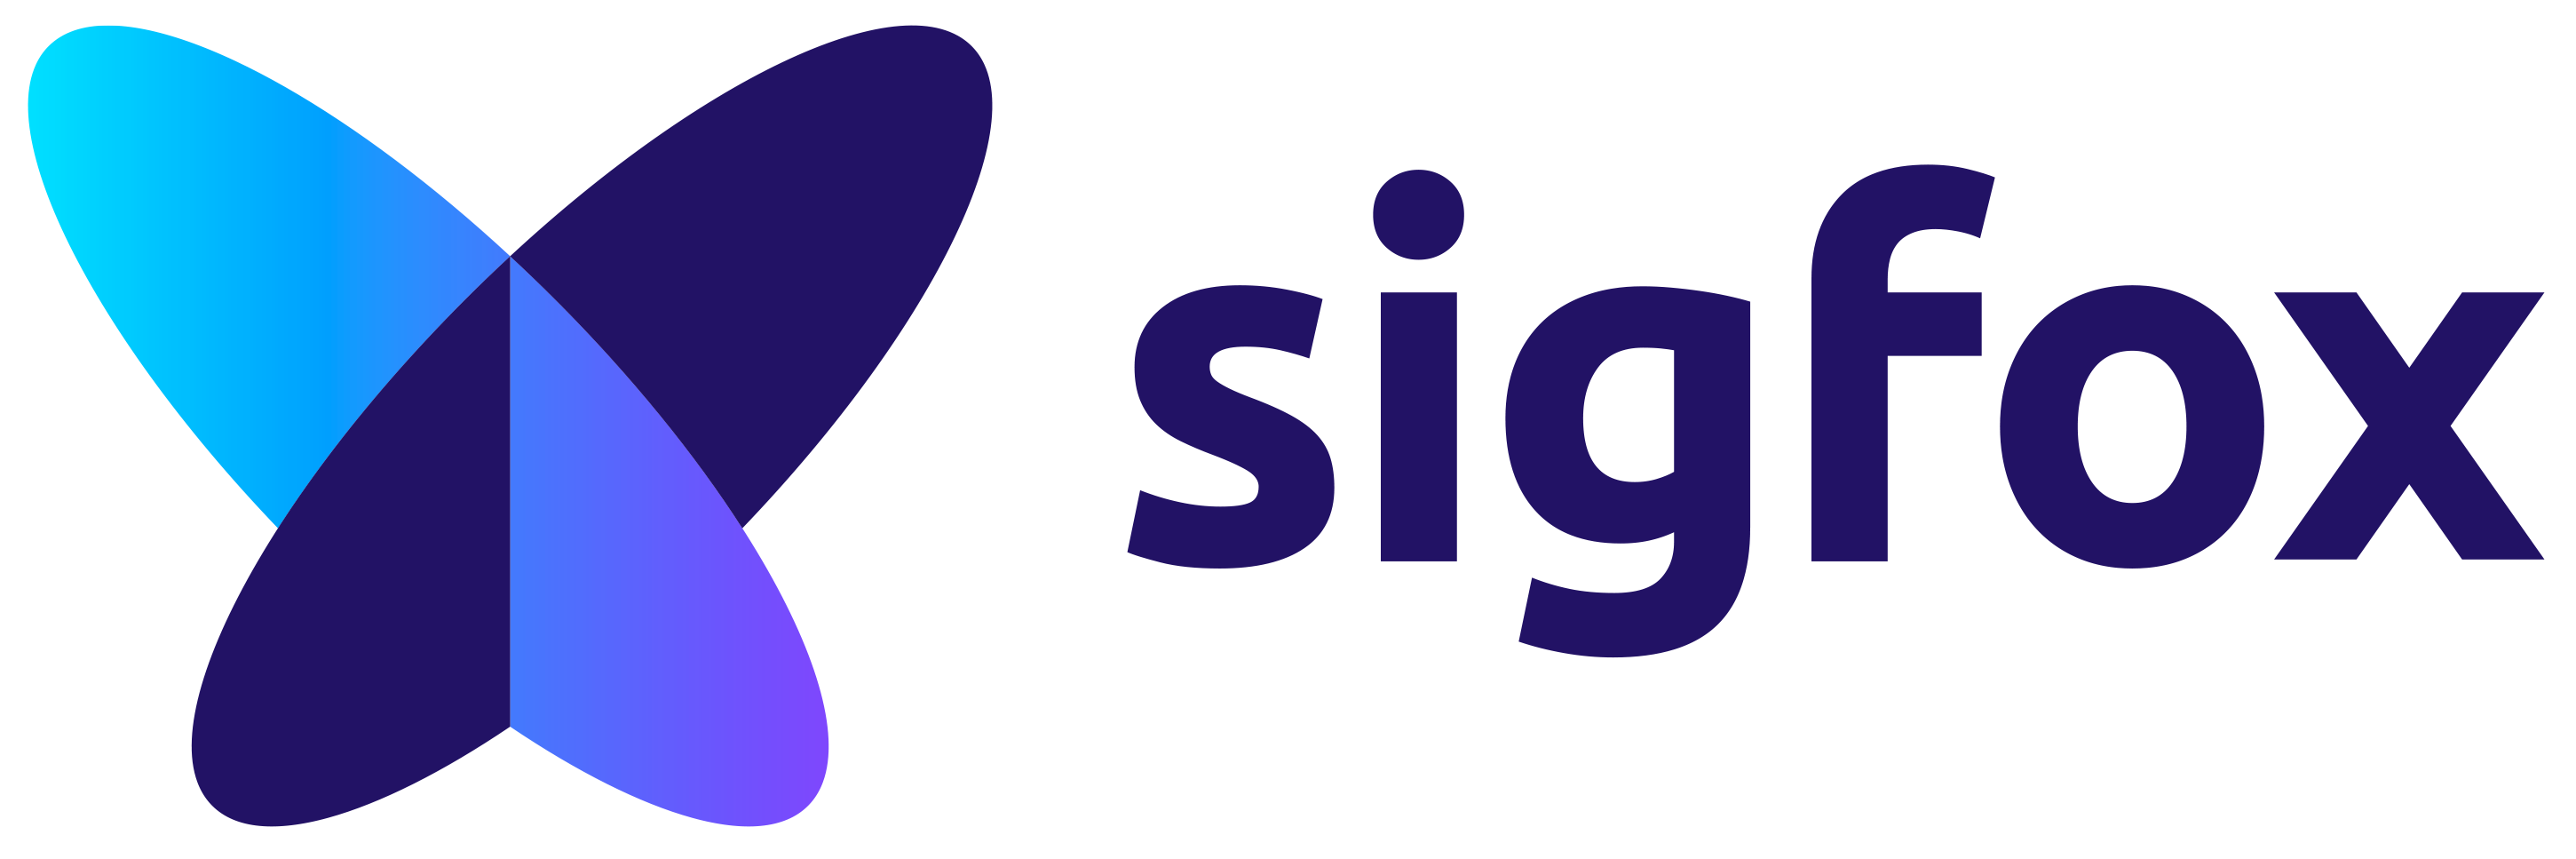 Sigfox-Logo